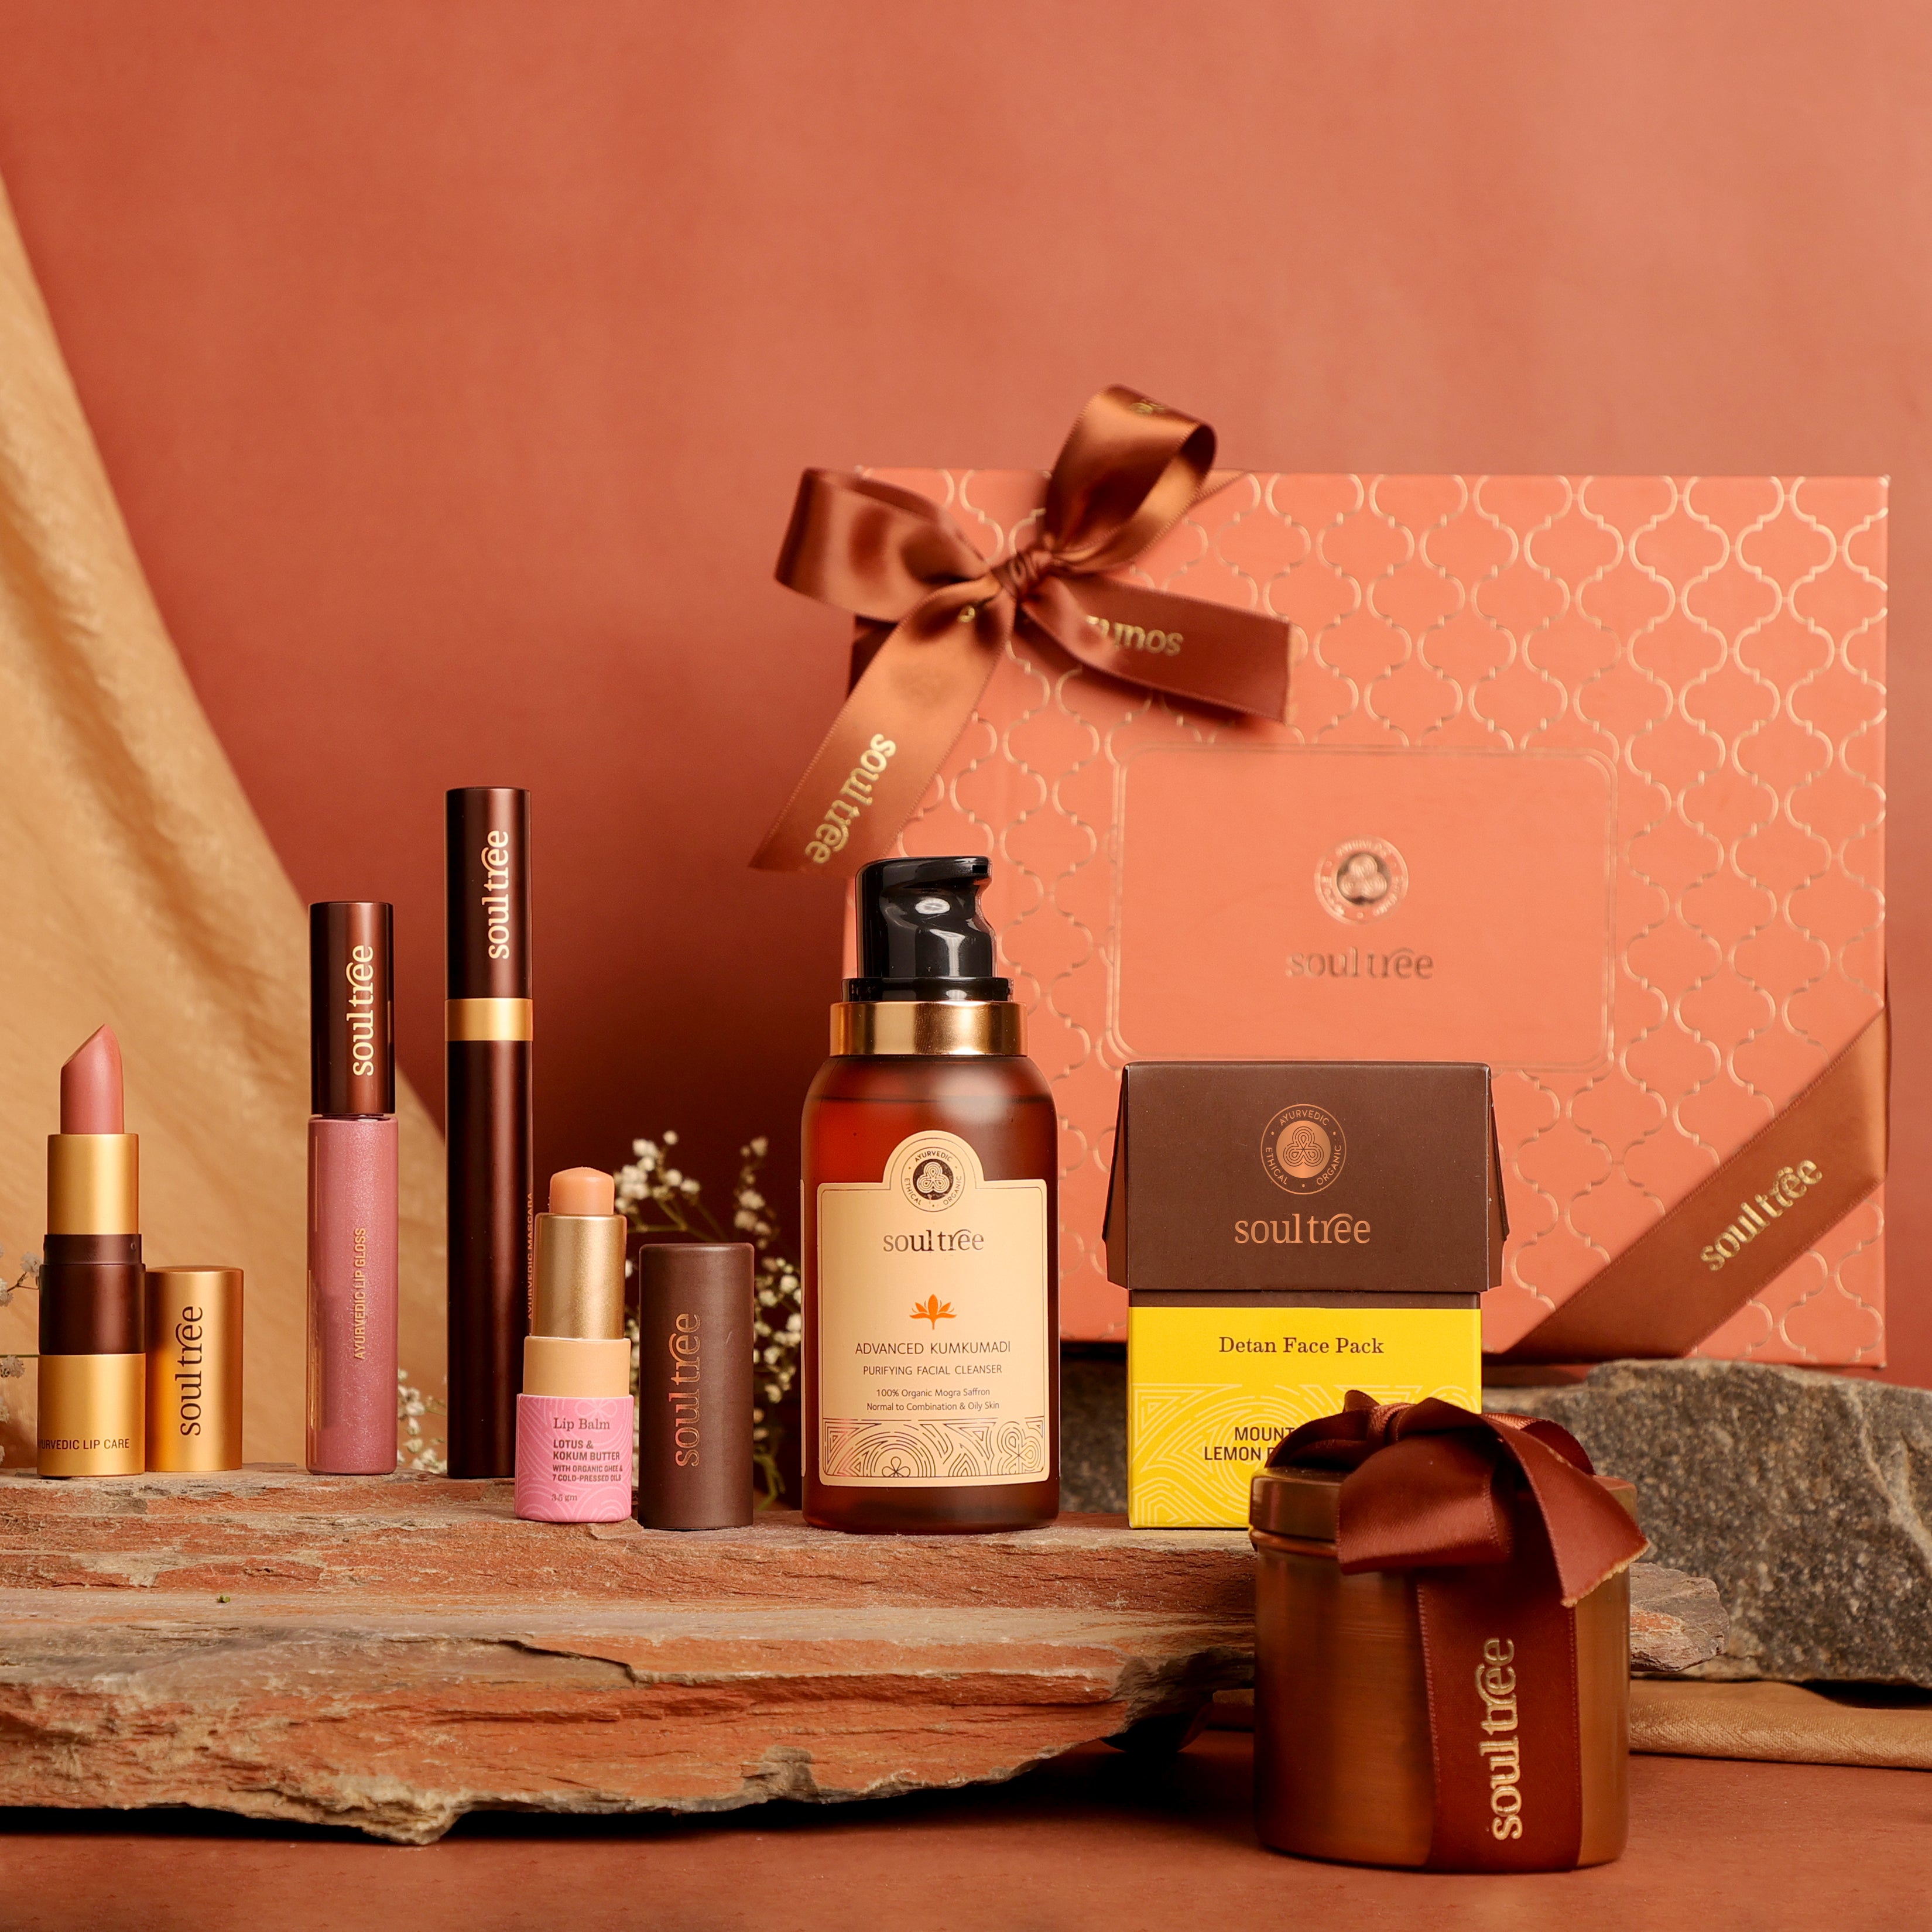 The Balanced Beauty Gift Box